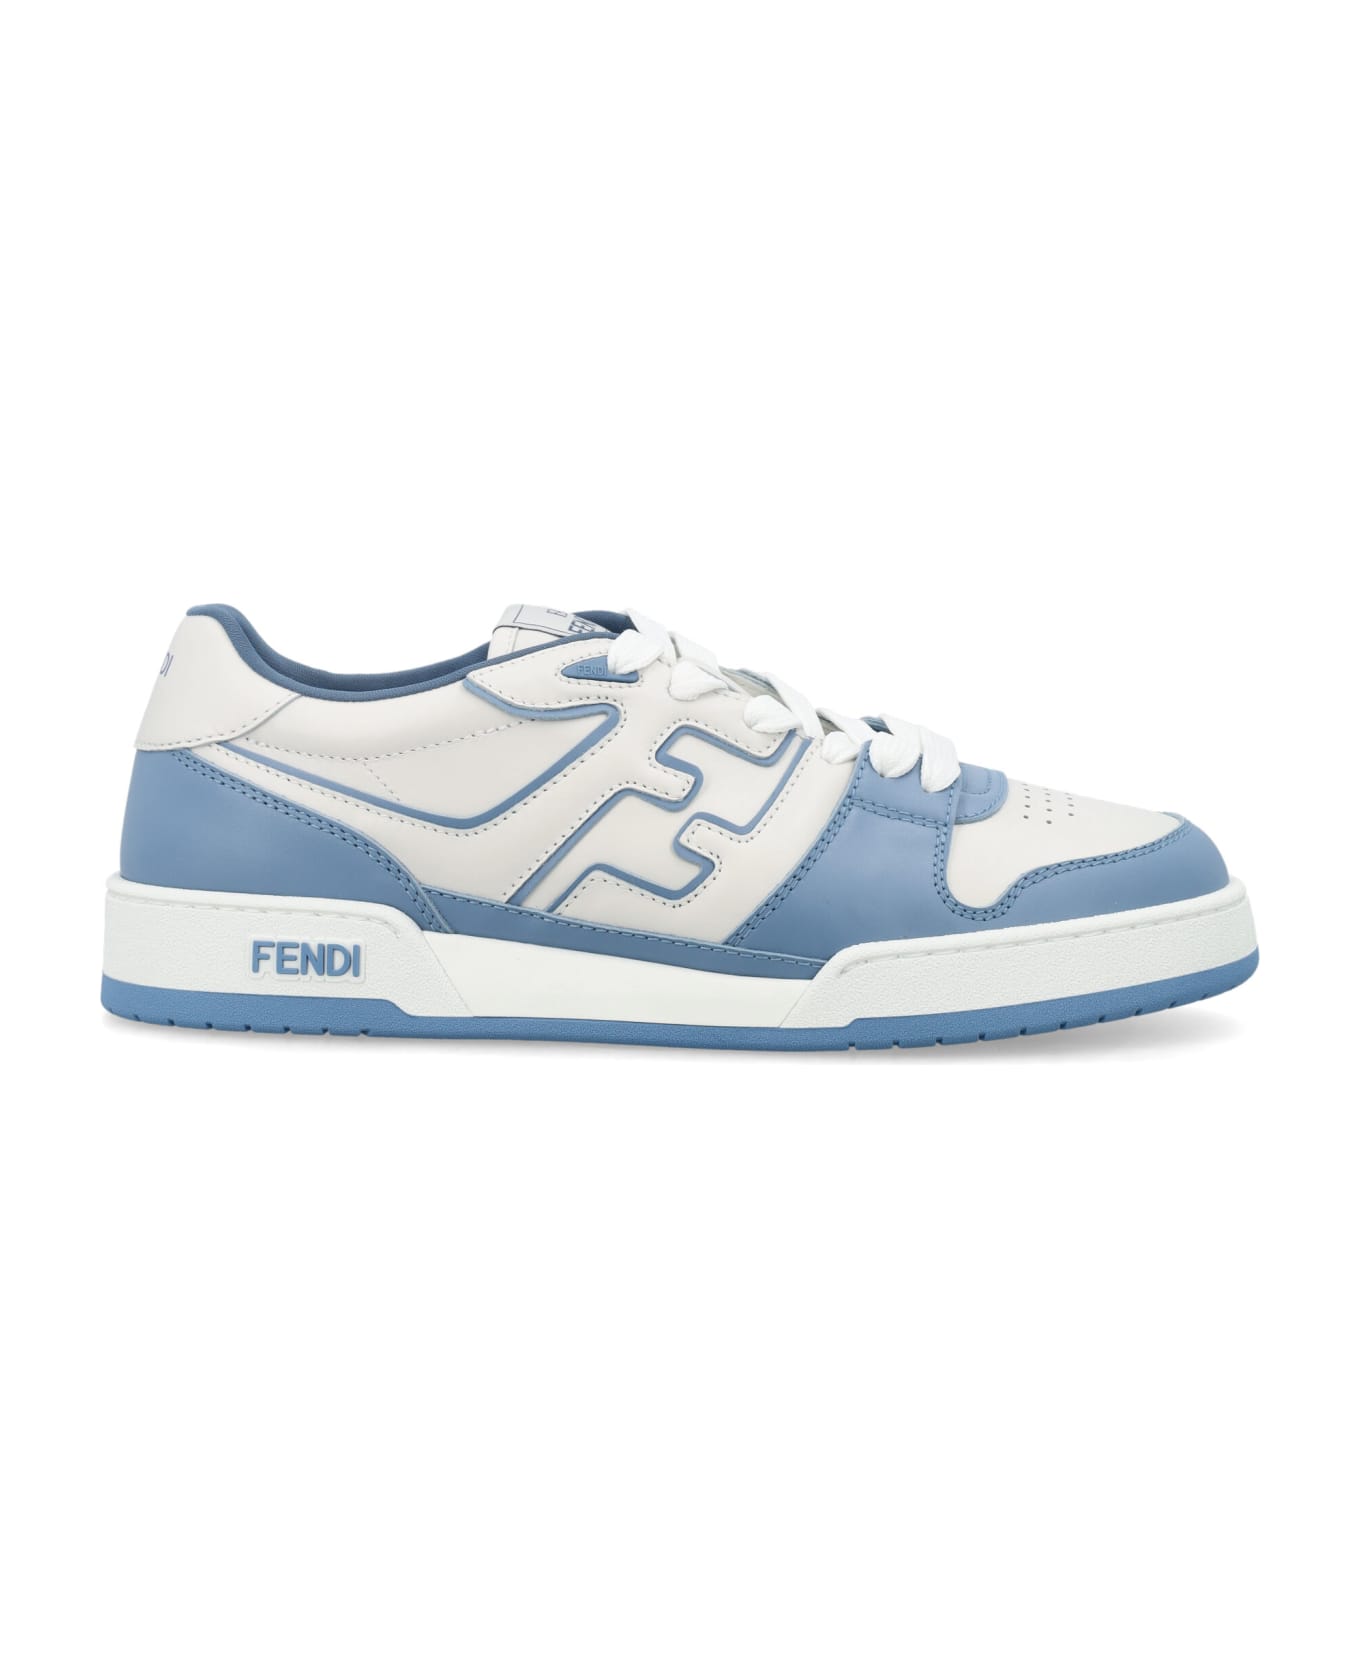 Fendi Match Woman Sneakers - Oie Sky White